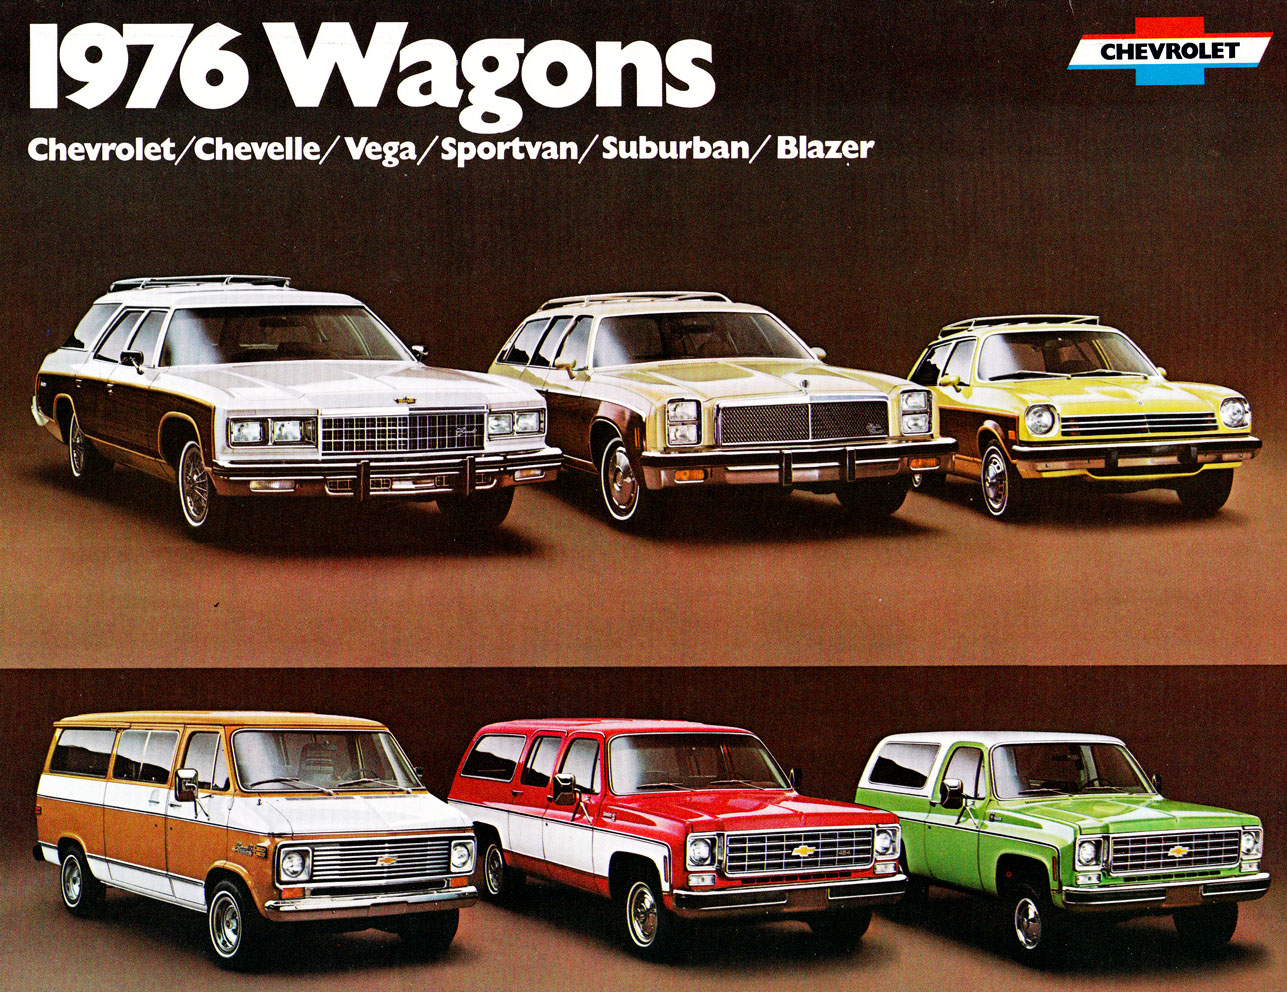 1976 Chevrolet Wagons Brochure